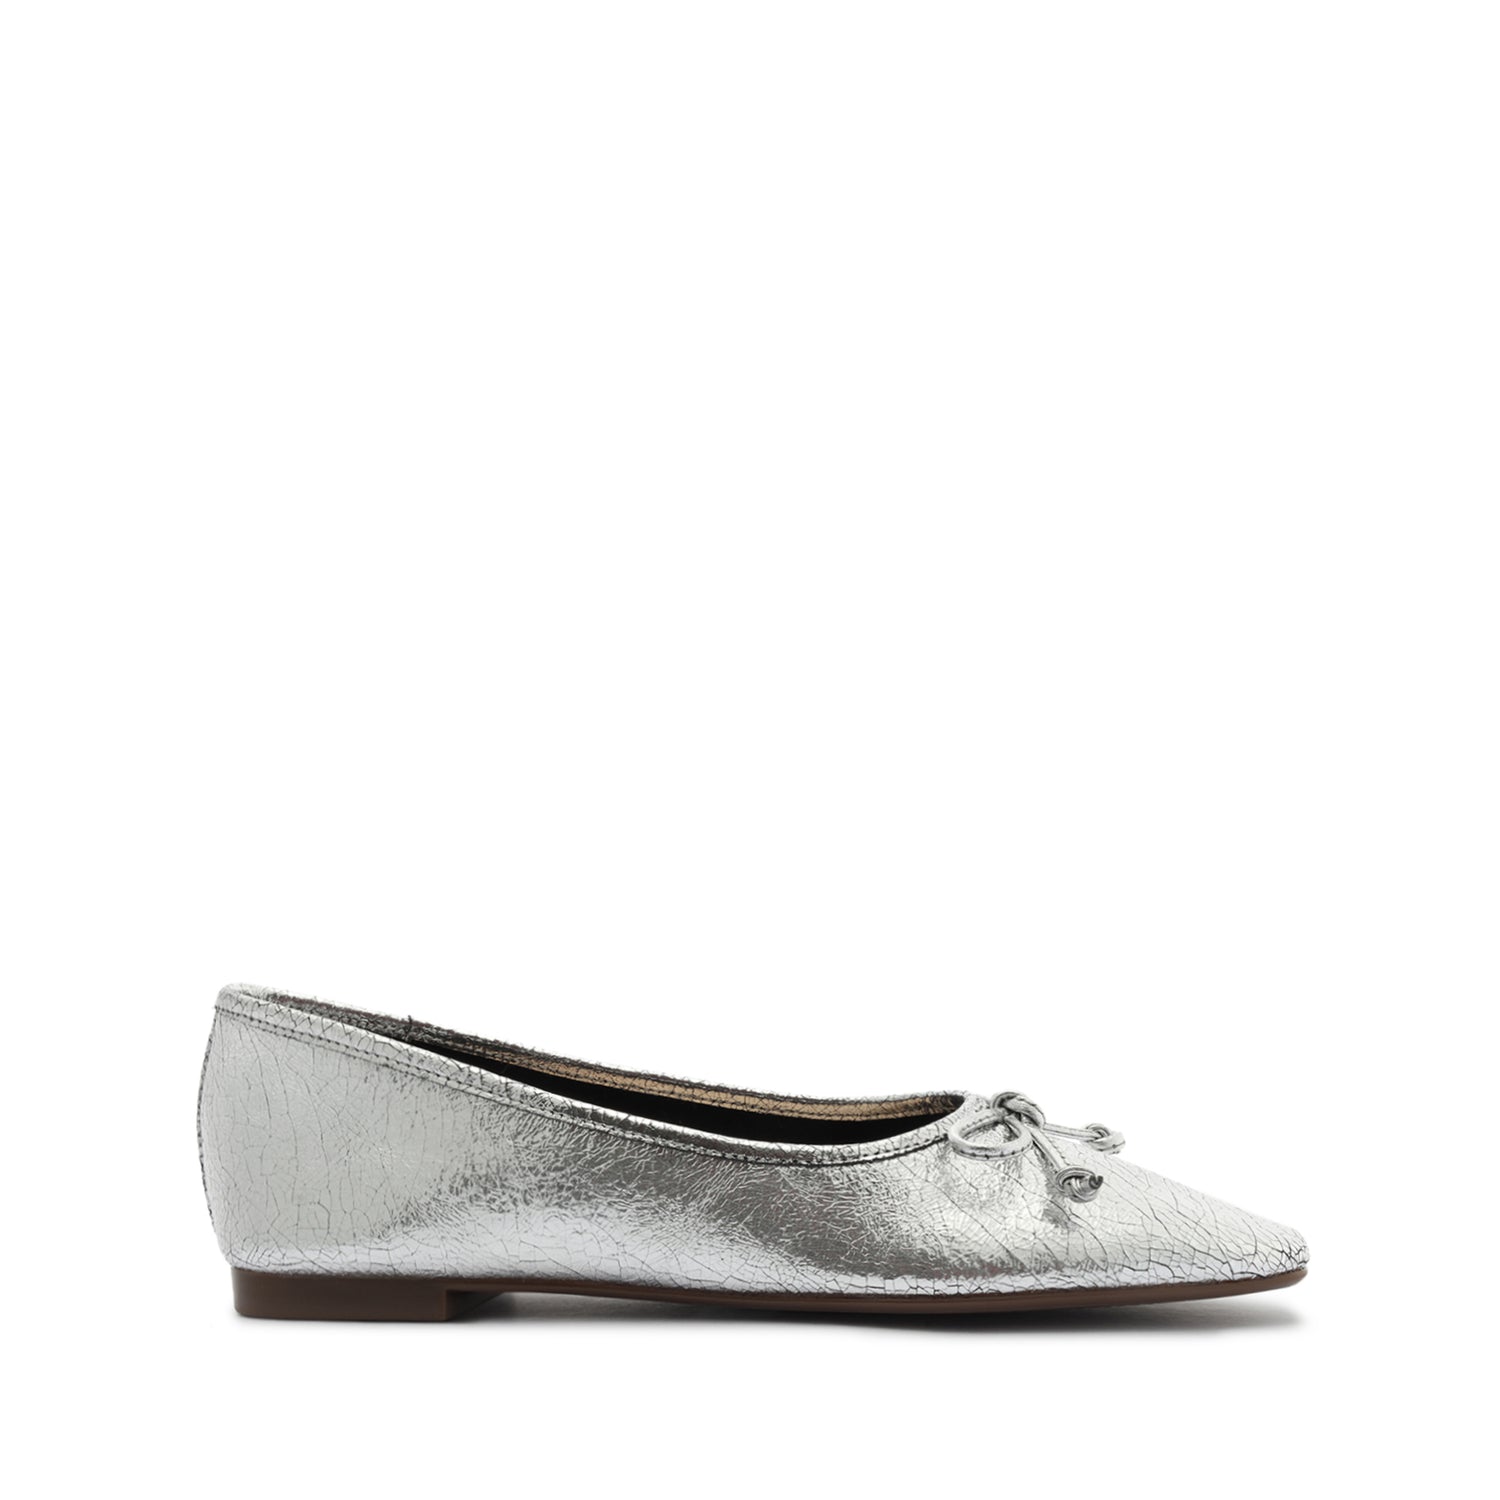 Arissa Flats FALL 23 5 Silver Metallic Crackled Leather - Schutz Shoes